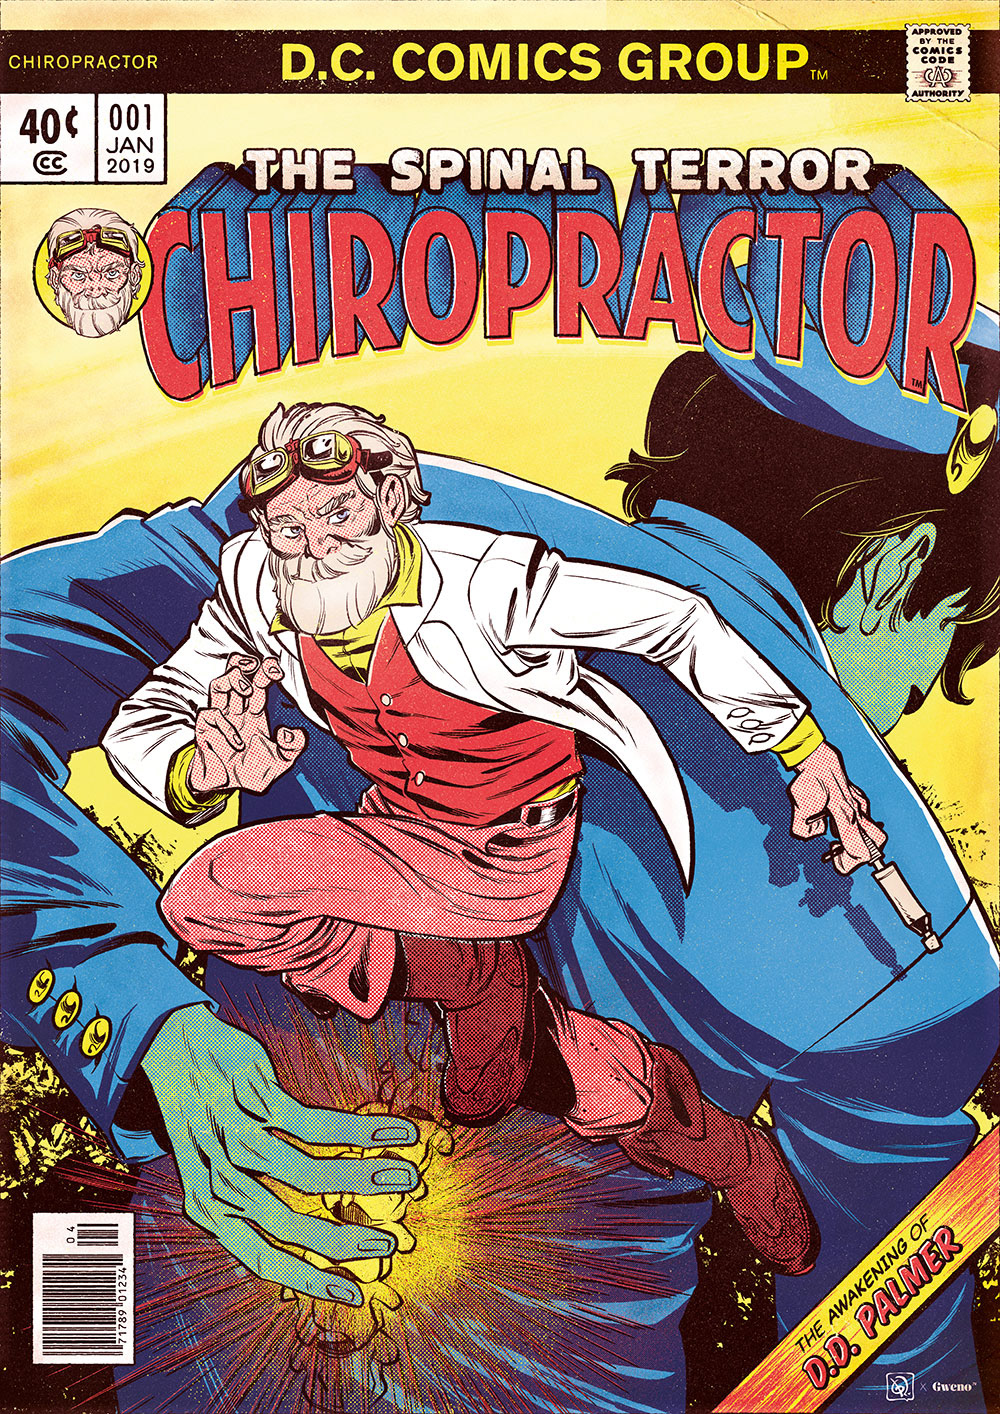 chiropractor comics comicbooks cover Cover Art cartoon graphic design 